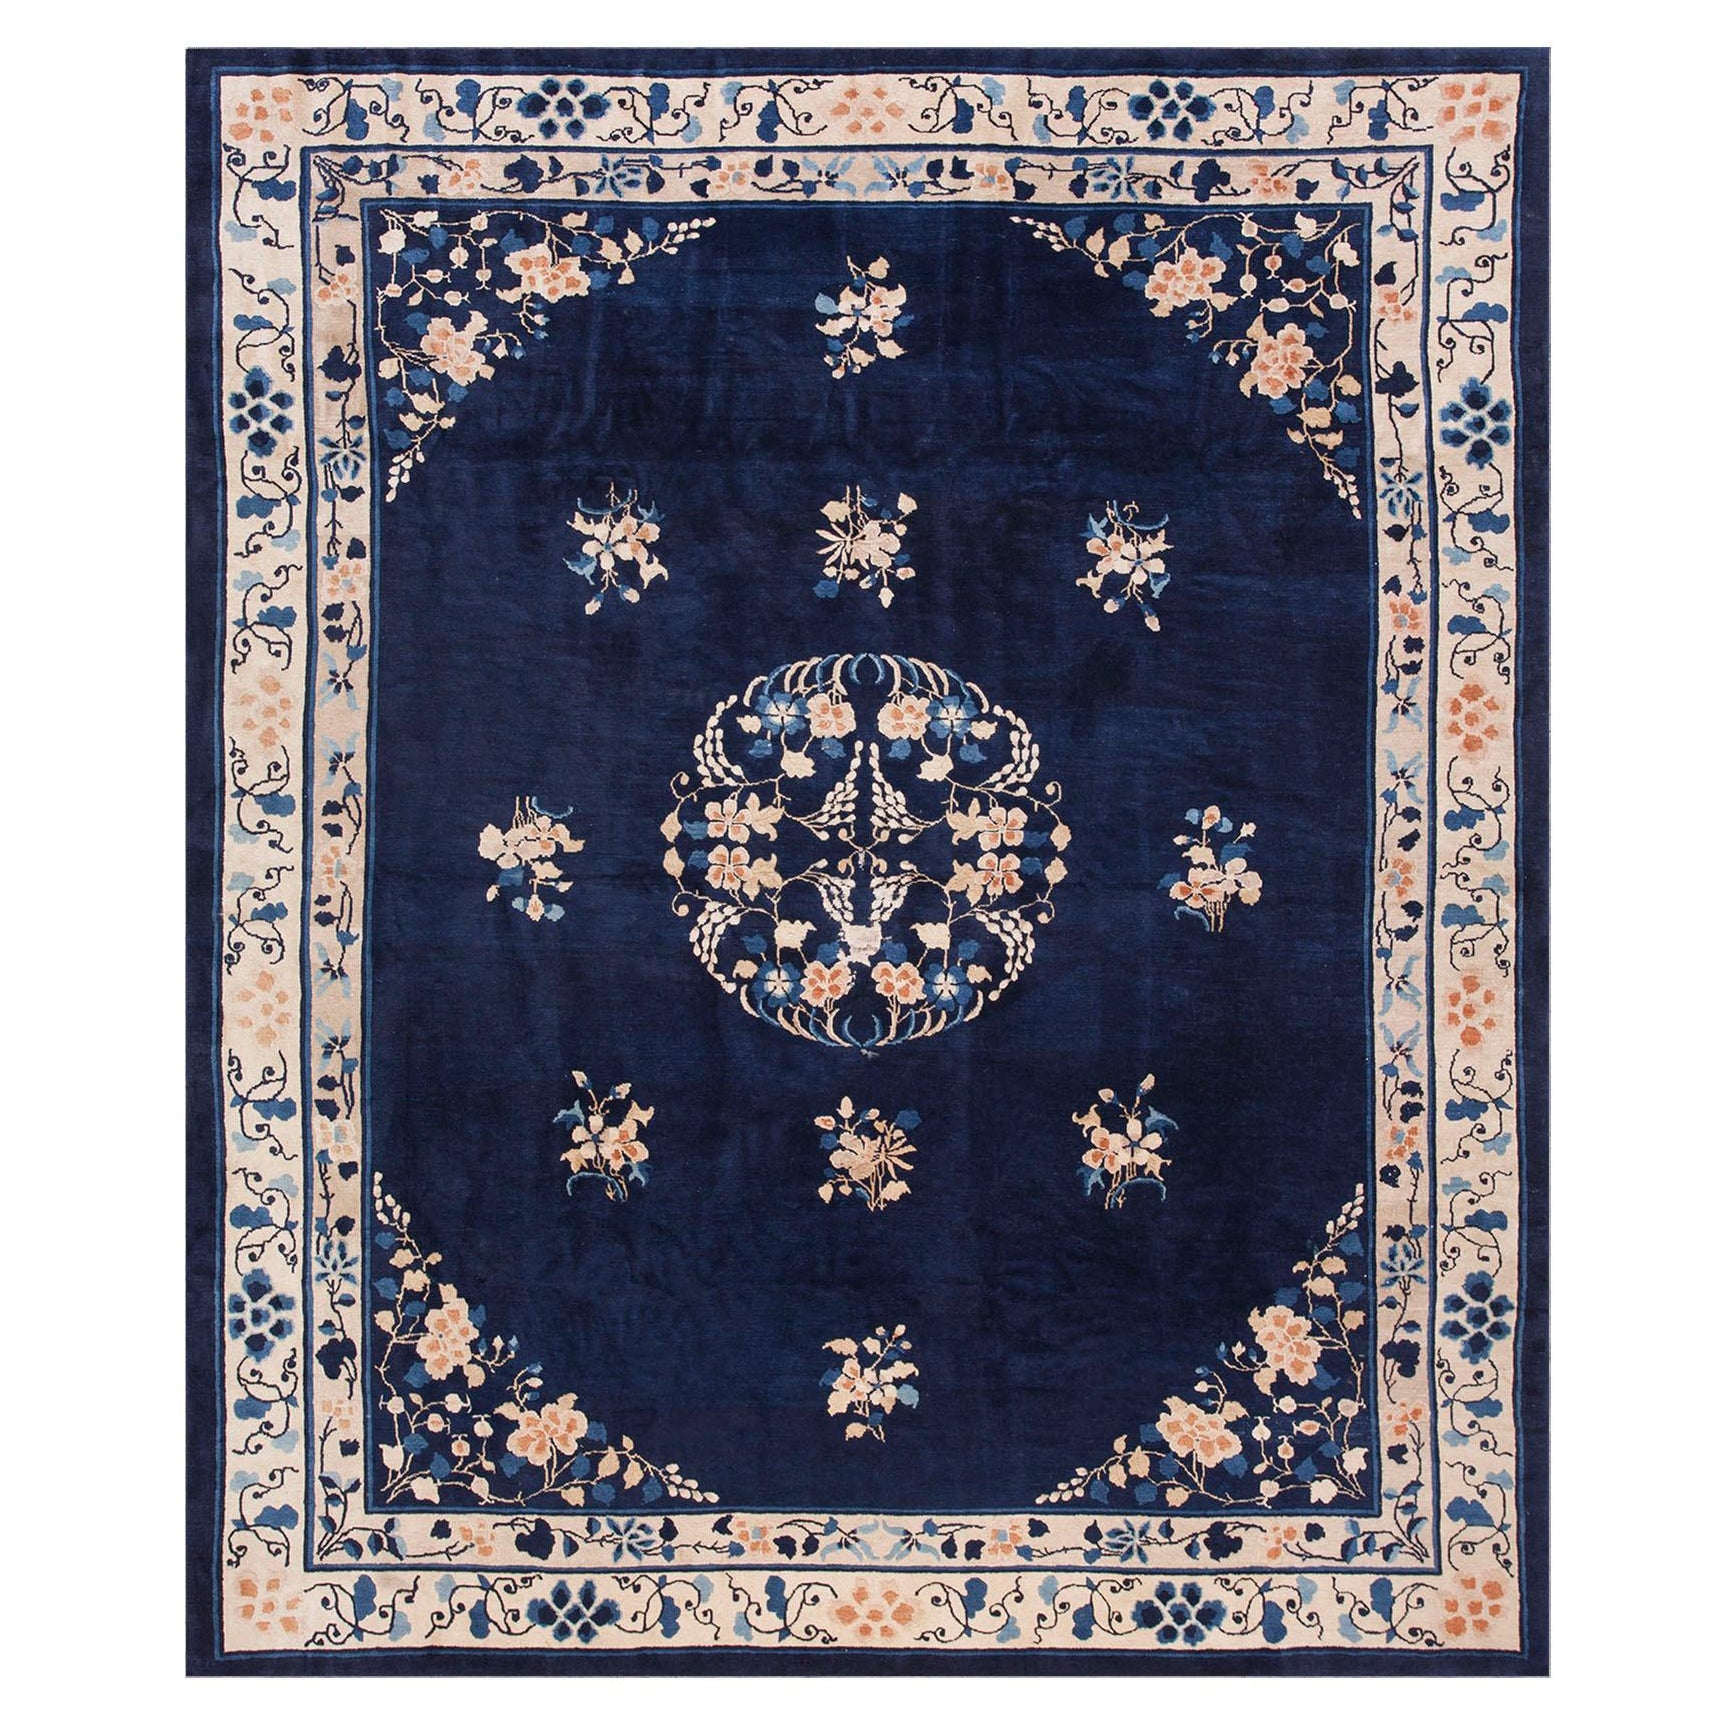 Early 20th Century Chinese Peking Carpet ( 8'3" x 9'9" - 252 x 297 )